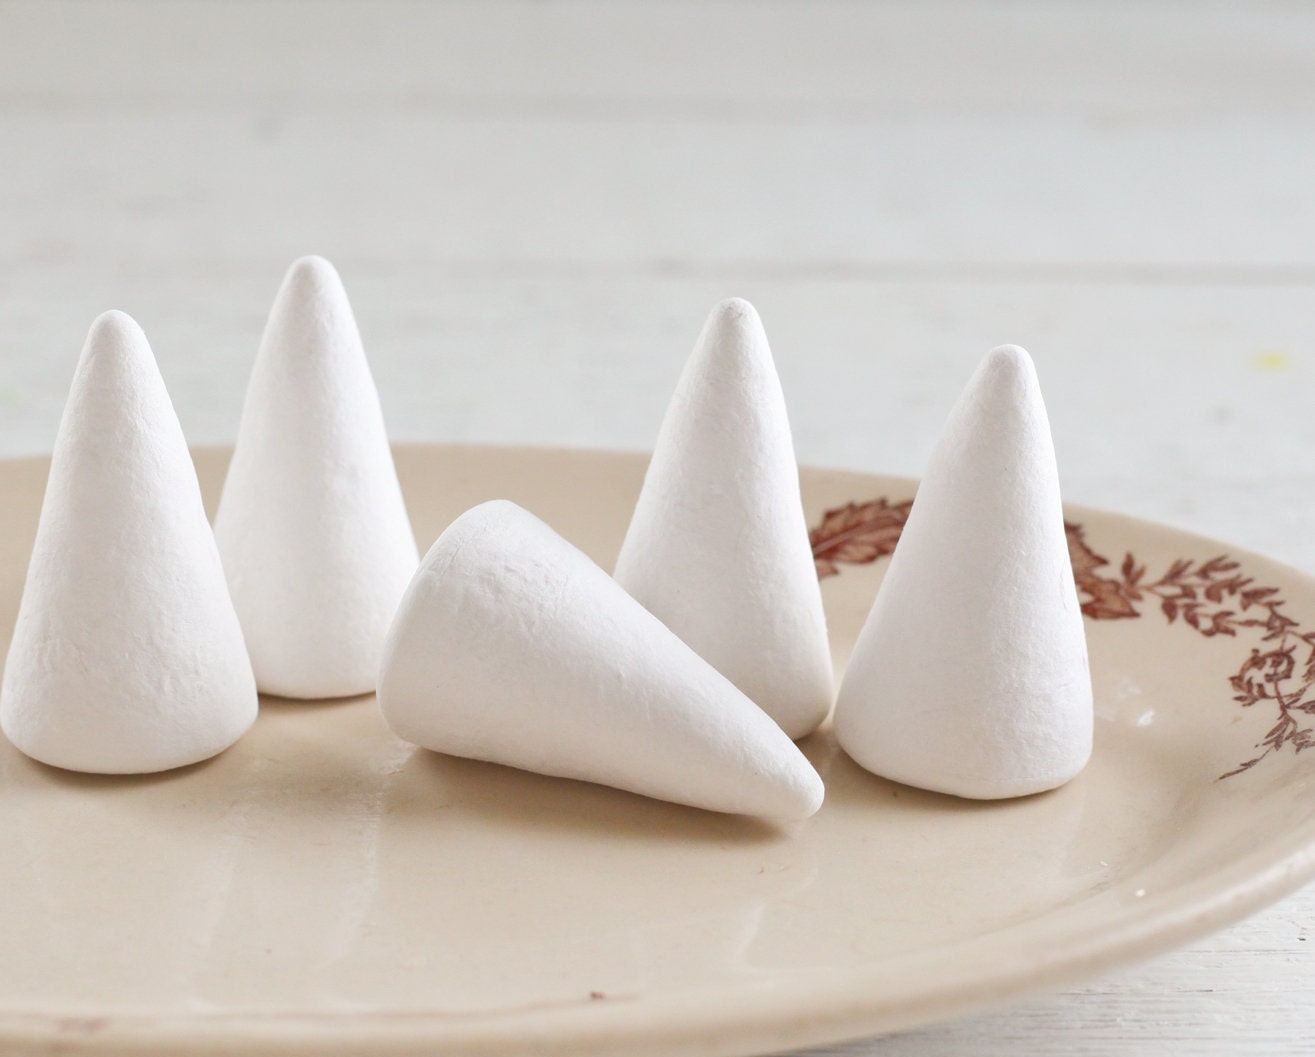 Buy 10 Polystyrene 6.5cm Cones to Decorate